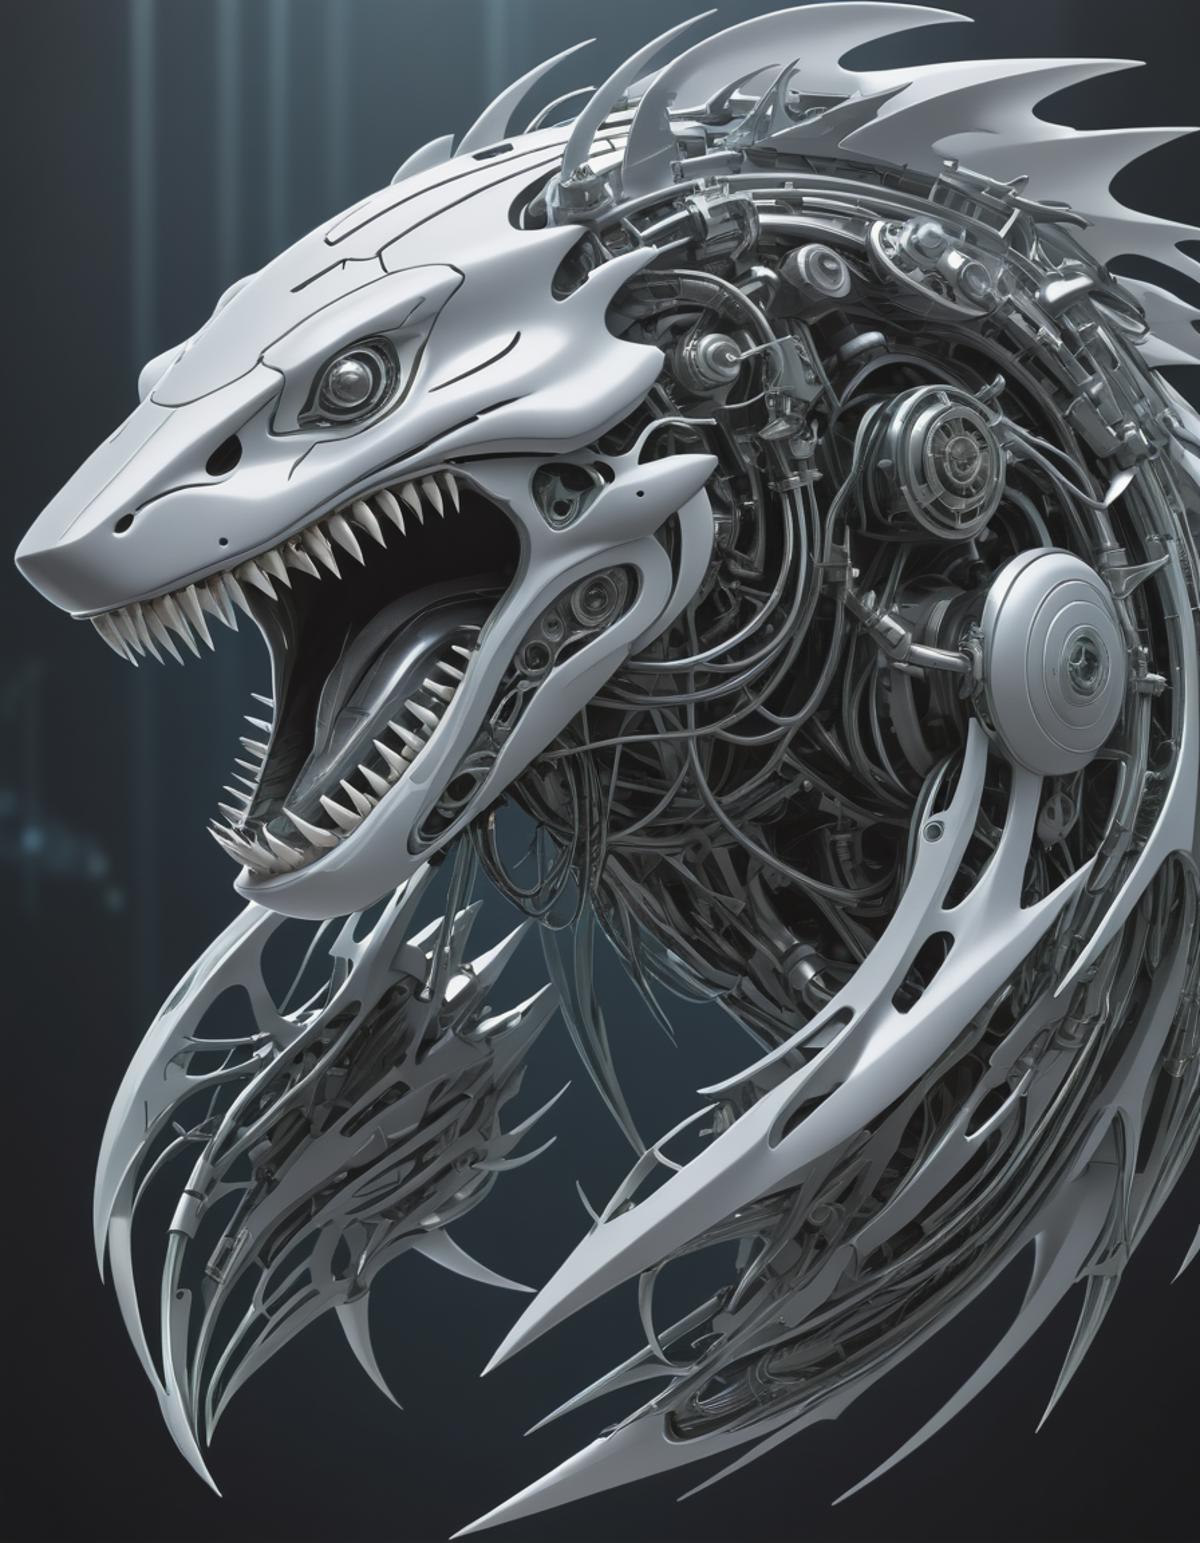 A metallic robot shark with sharp teeth and circuitry.